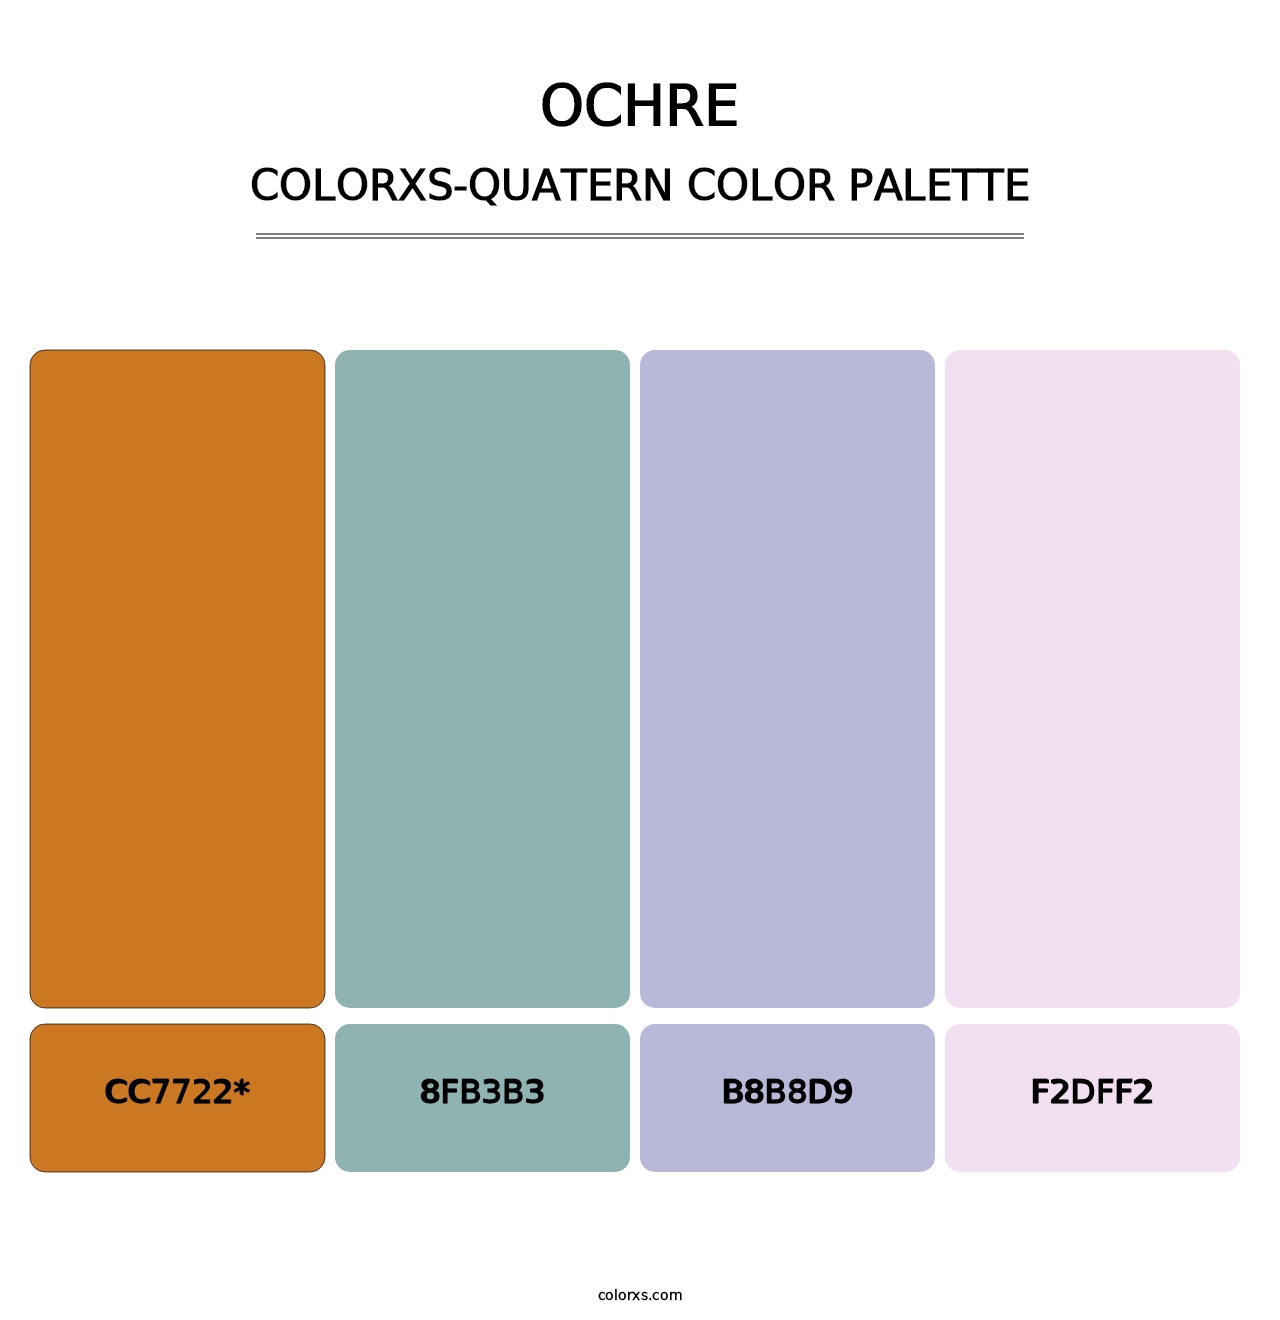 Ochre - Colorxs Quatern Palette